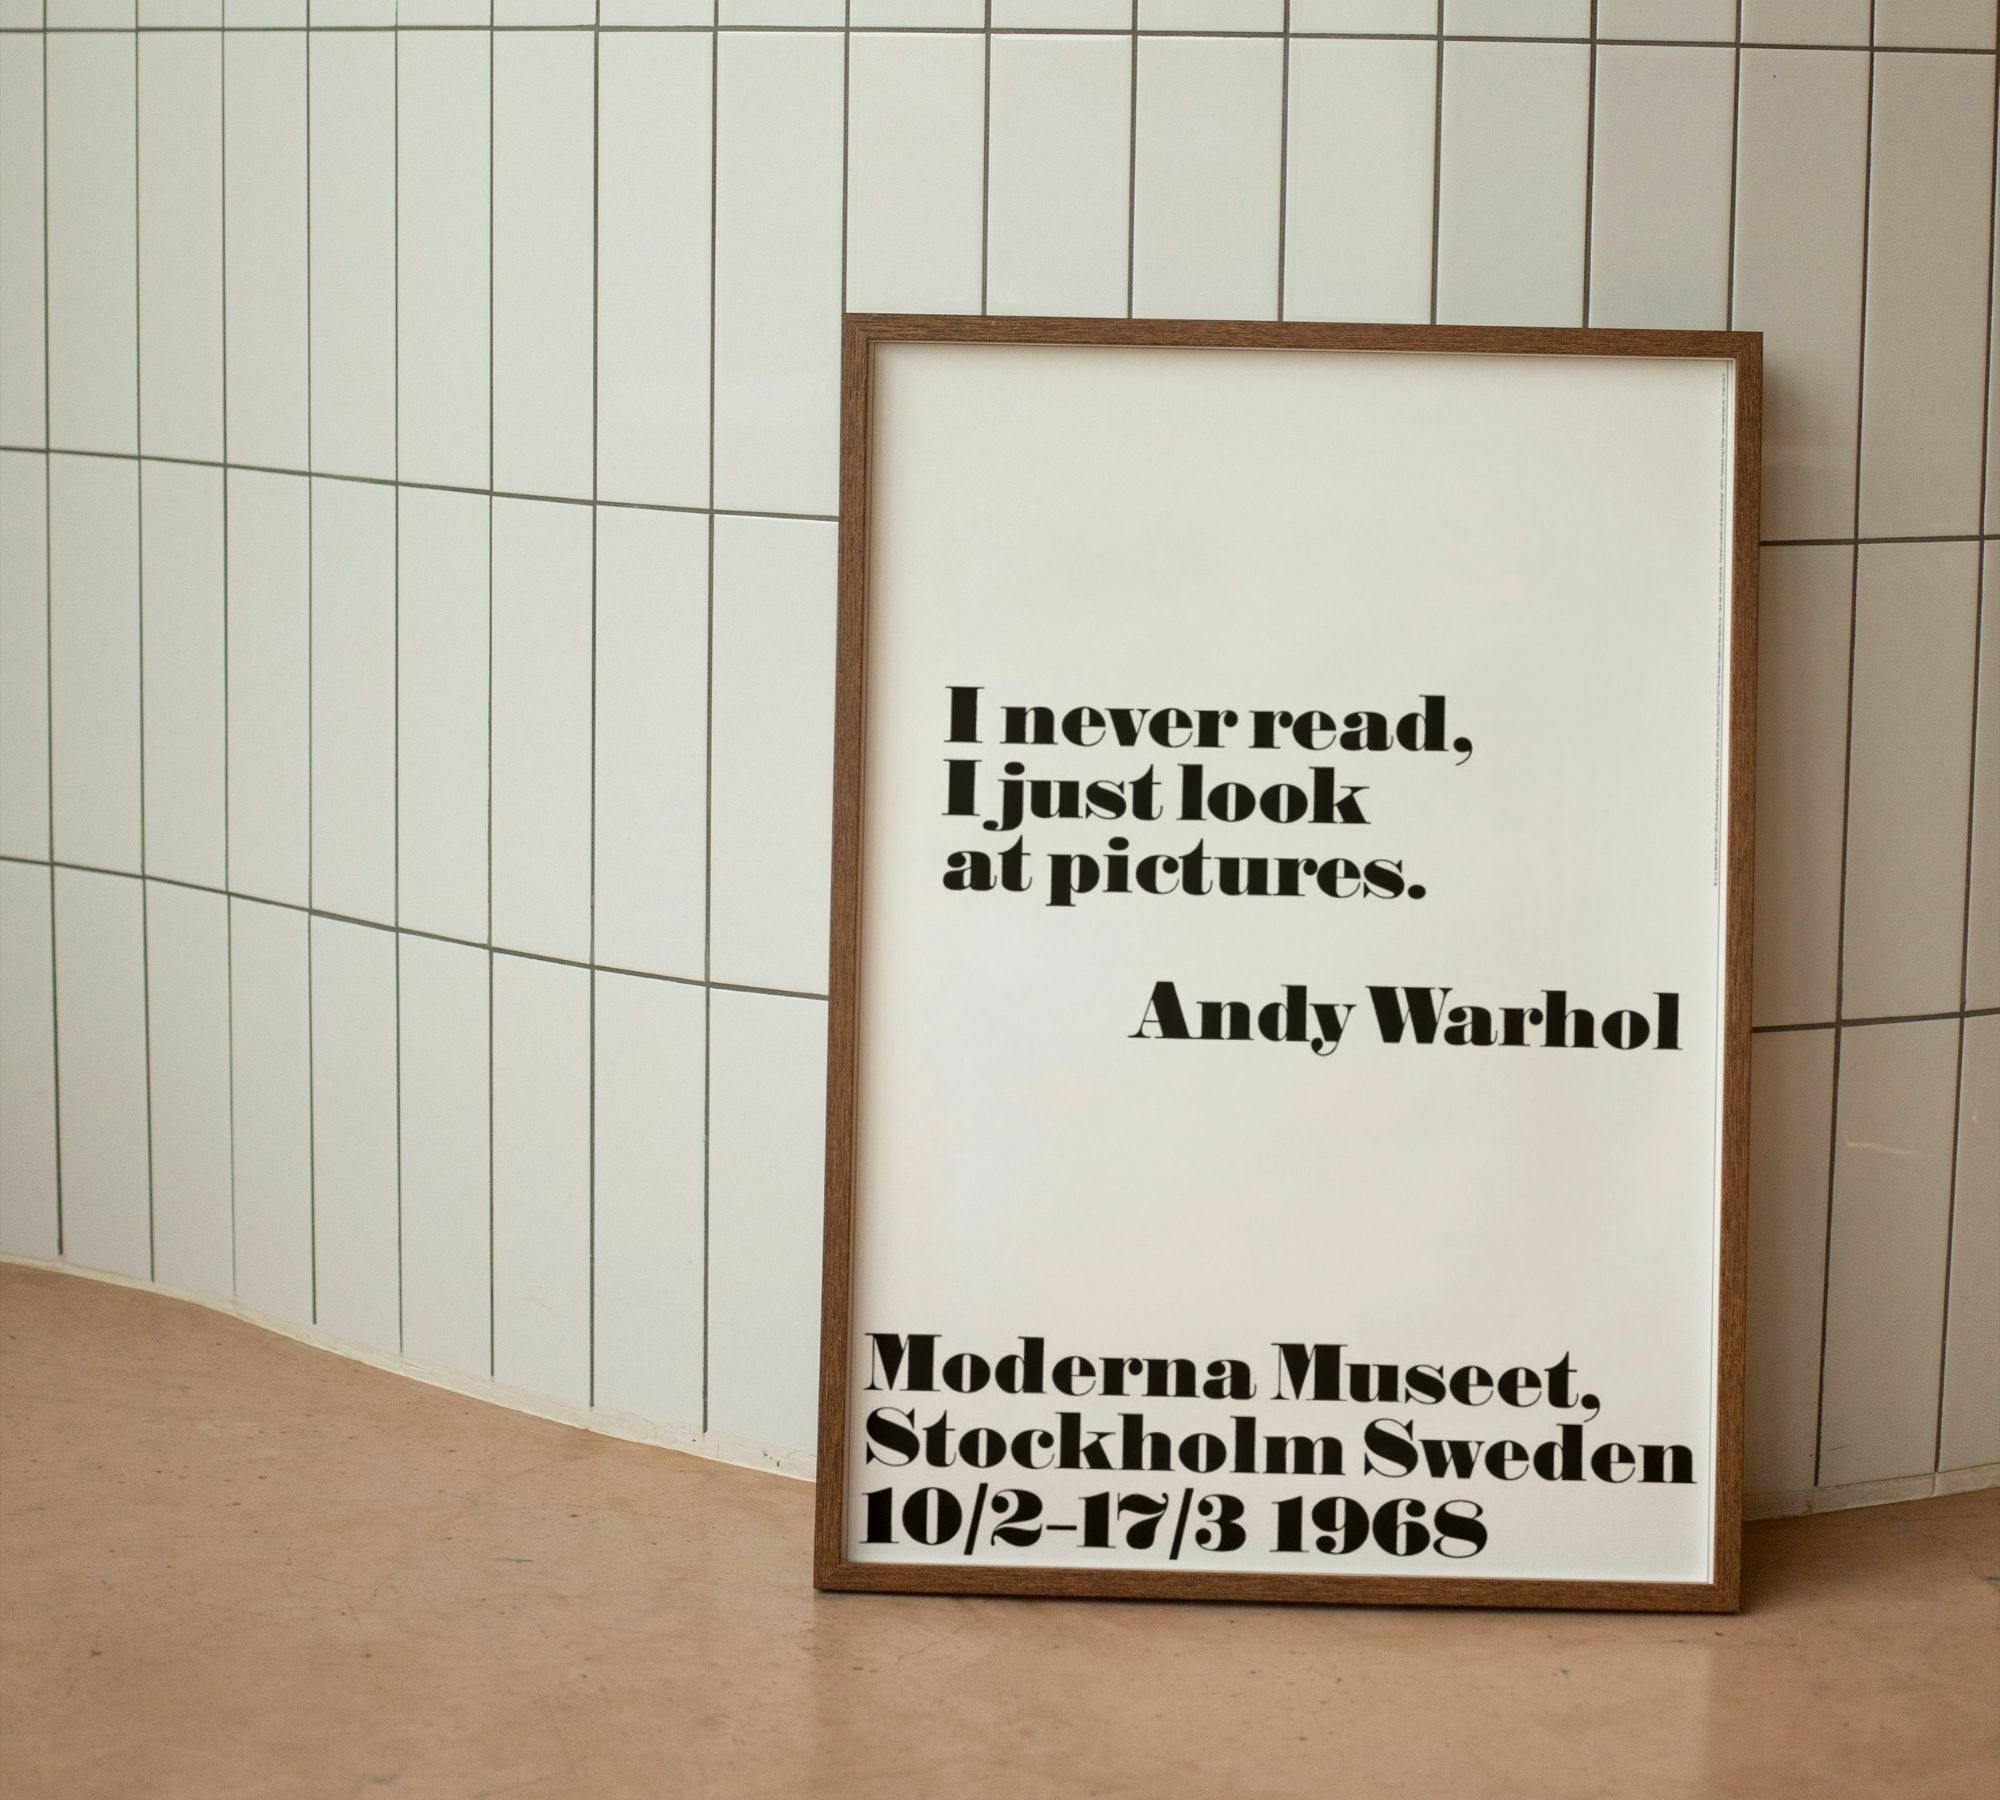 I never read - Andy Warhol 70 x 100 cm 2